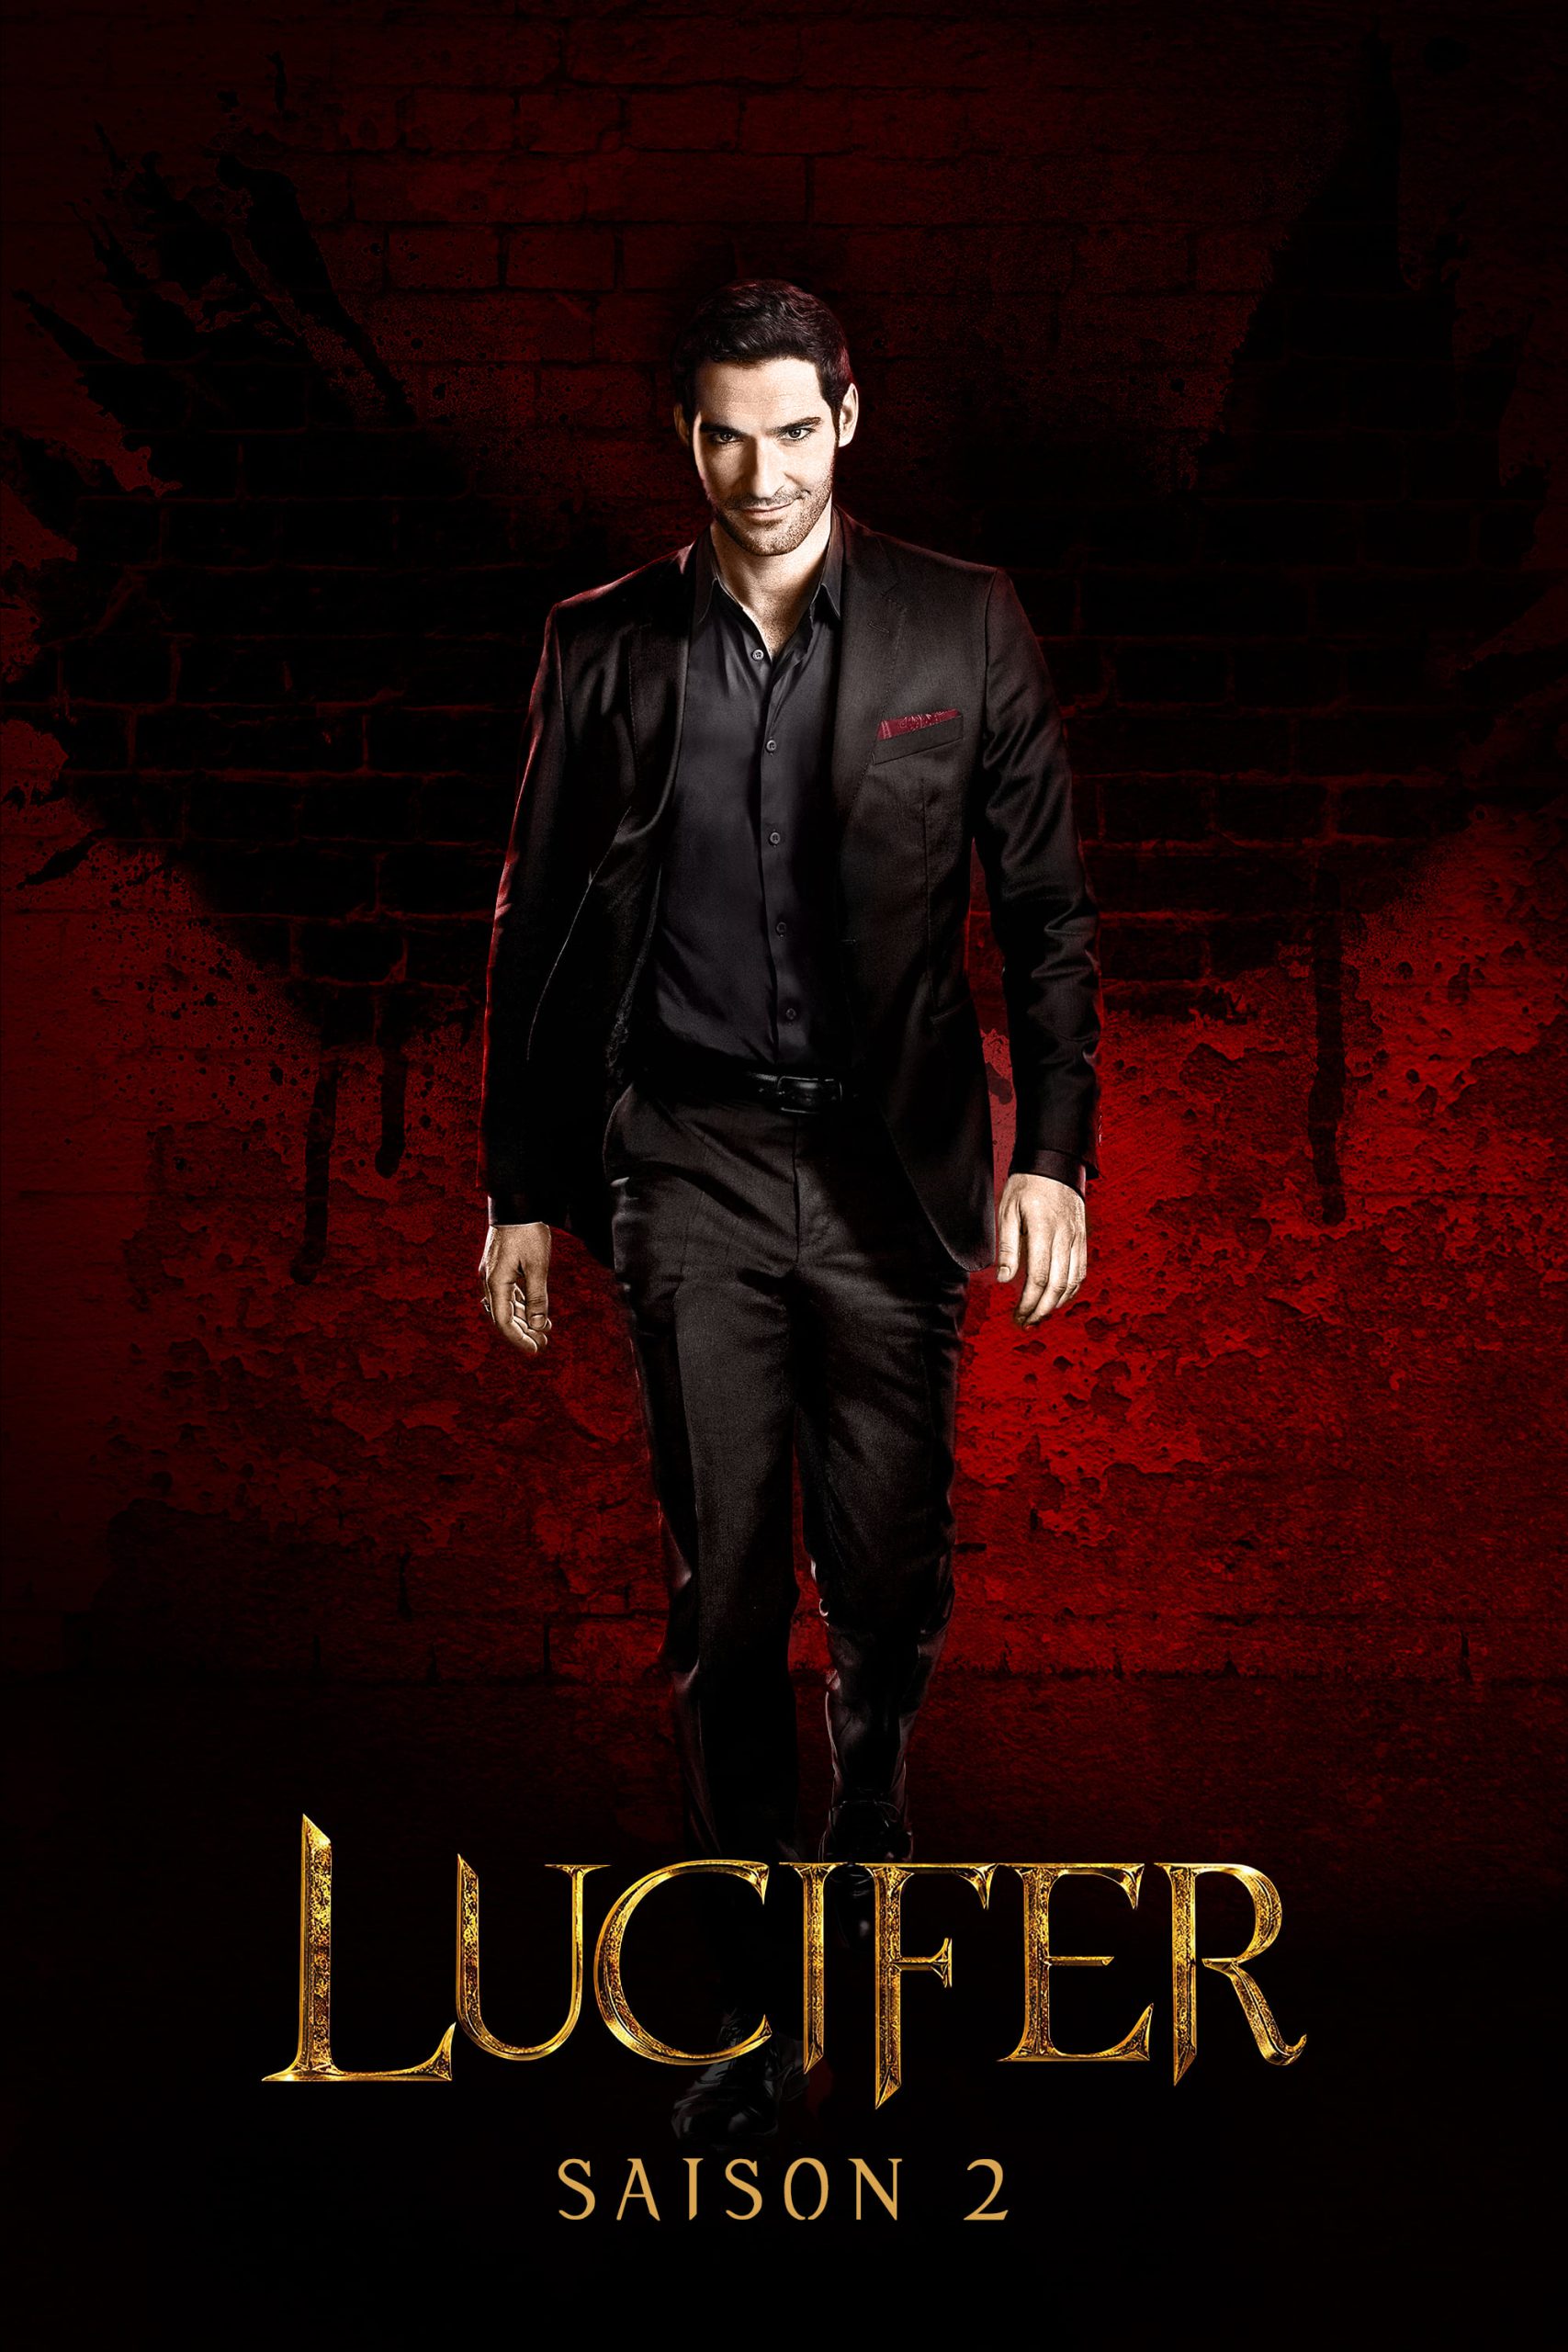 Lucifer (2016) ลูซิเฟอร์ ยมทูตล้างนรก Season 2